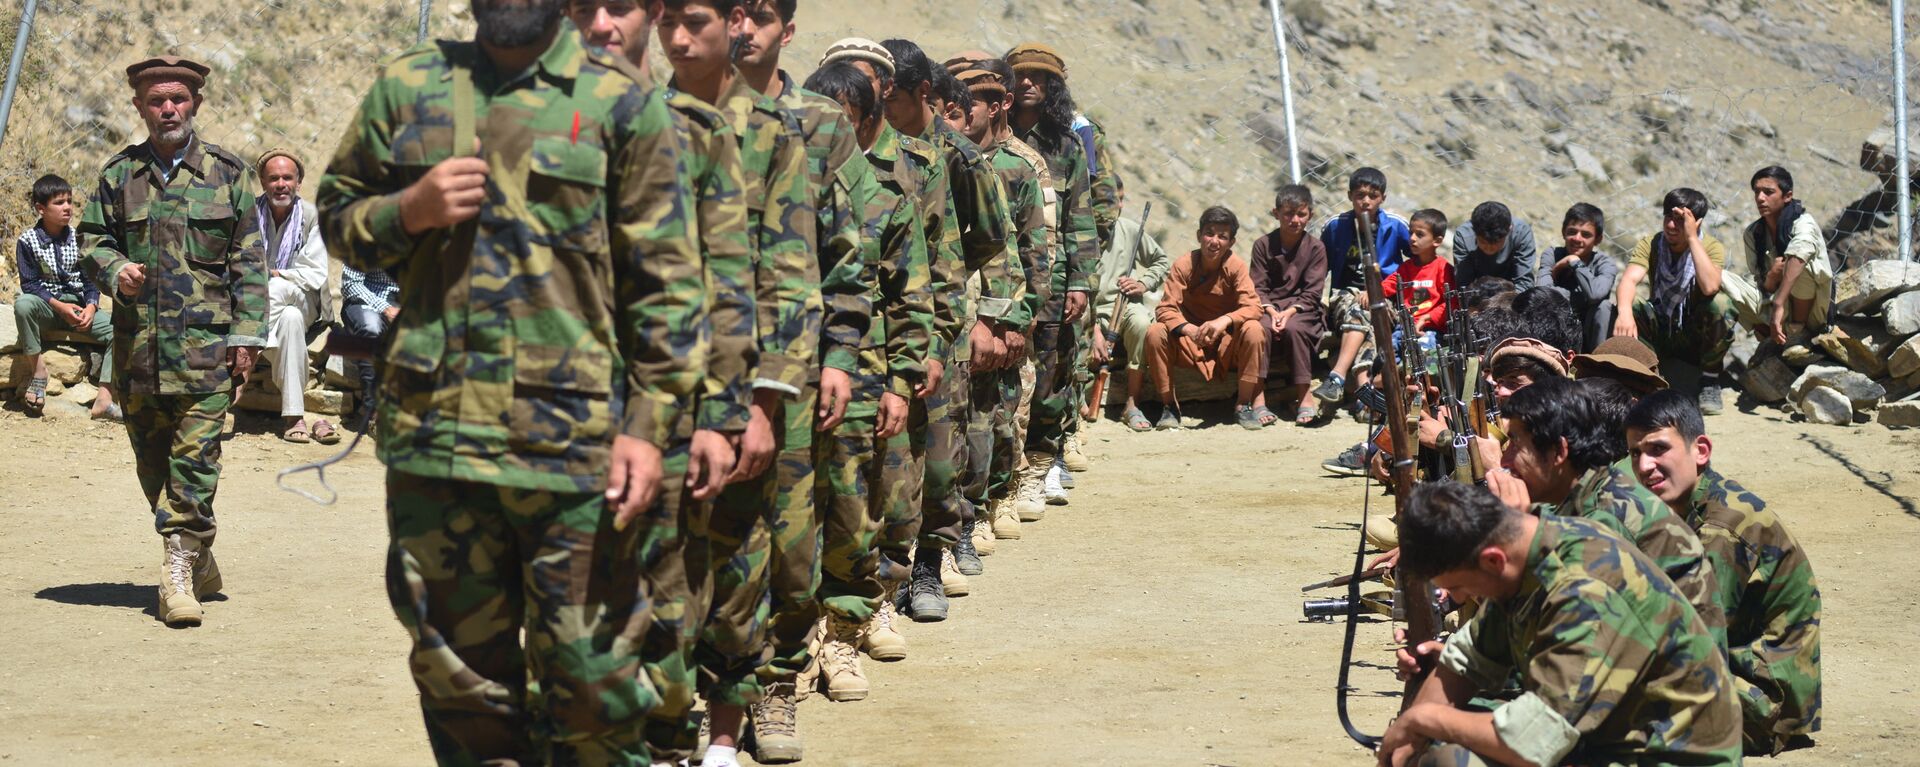 Avganistanski pokret otpora tokom obuke u oblasti Abdulah Hil okruga Dara u pokrajini Pandžšer  - Sputnik Srbija, 1920, 06.09.2021